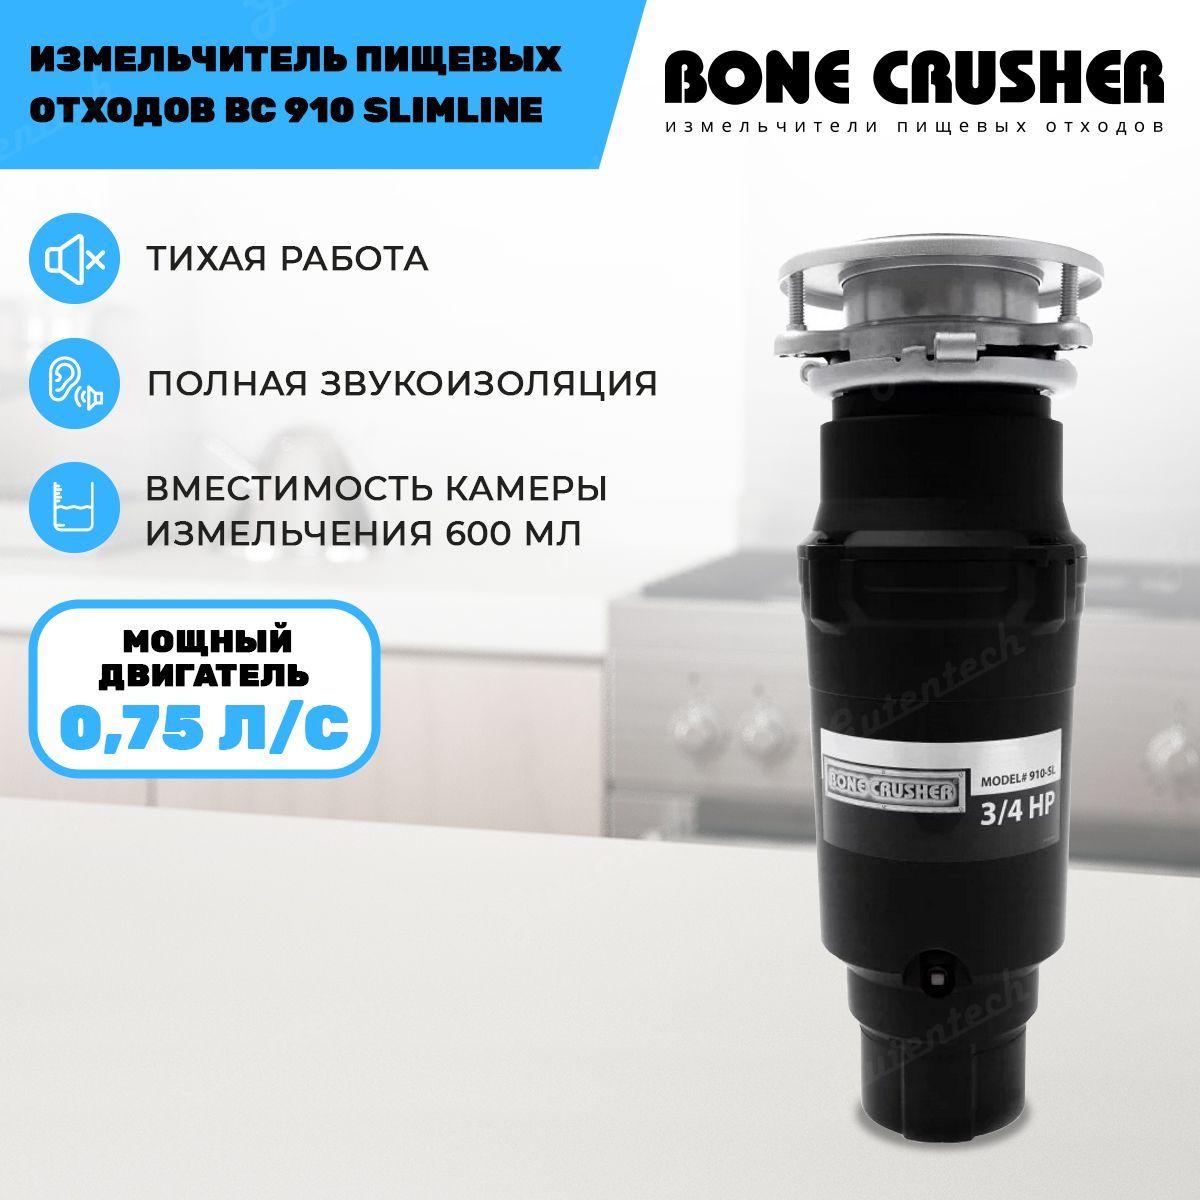 Bone crusher 910 slim. Bone crusher bc910 Slim line. Bone crusher bc910. Bone crusher BC-910 Slim line схема установки.